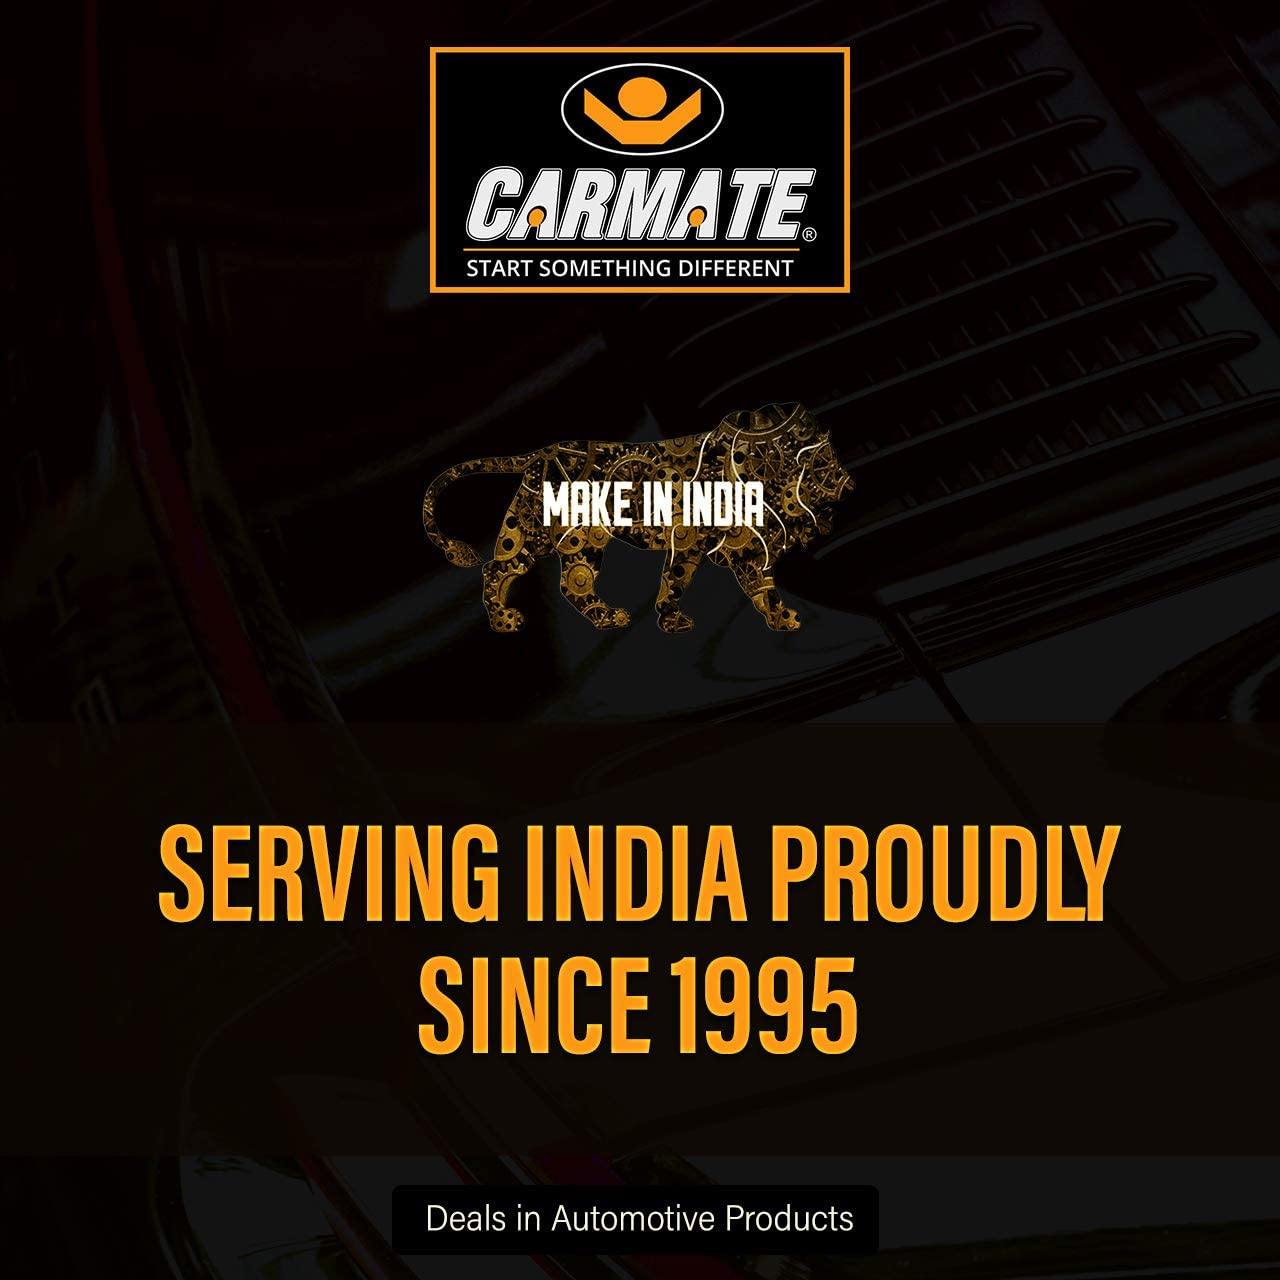 Carmate Passion Car Body Cover (Black and Orange) for Tata - Safari Dicor - CARMATE®